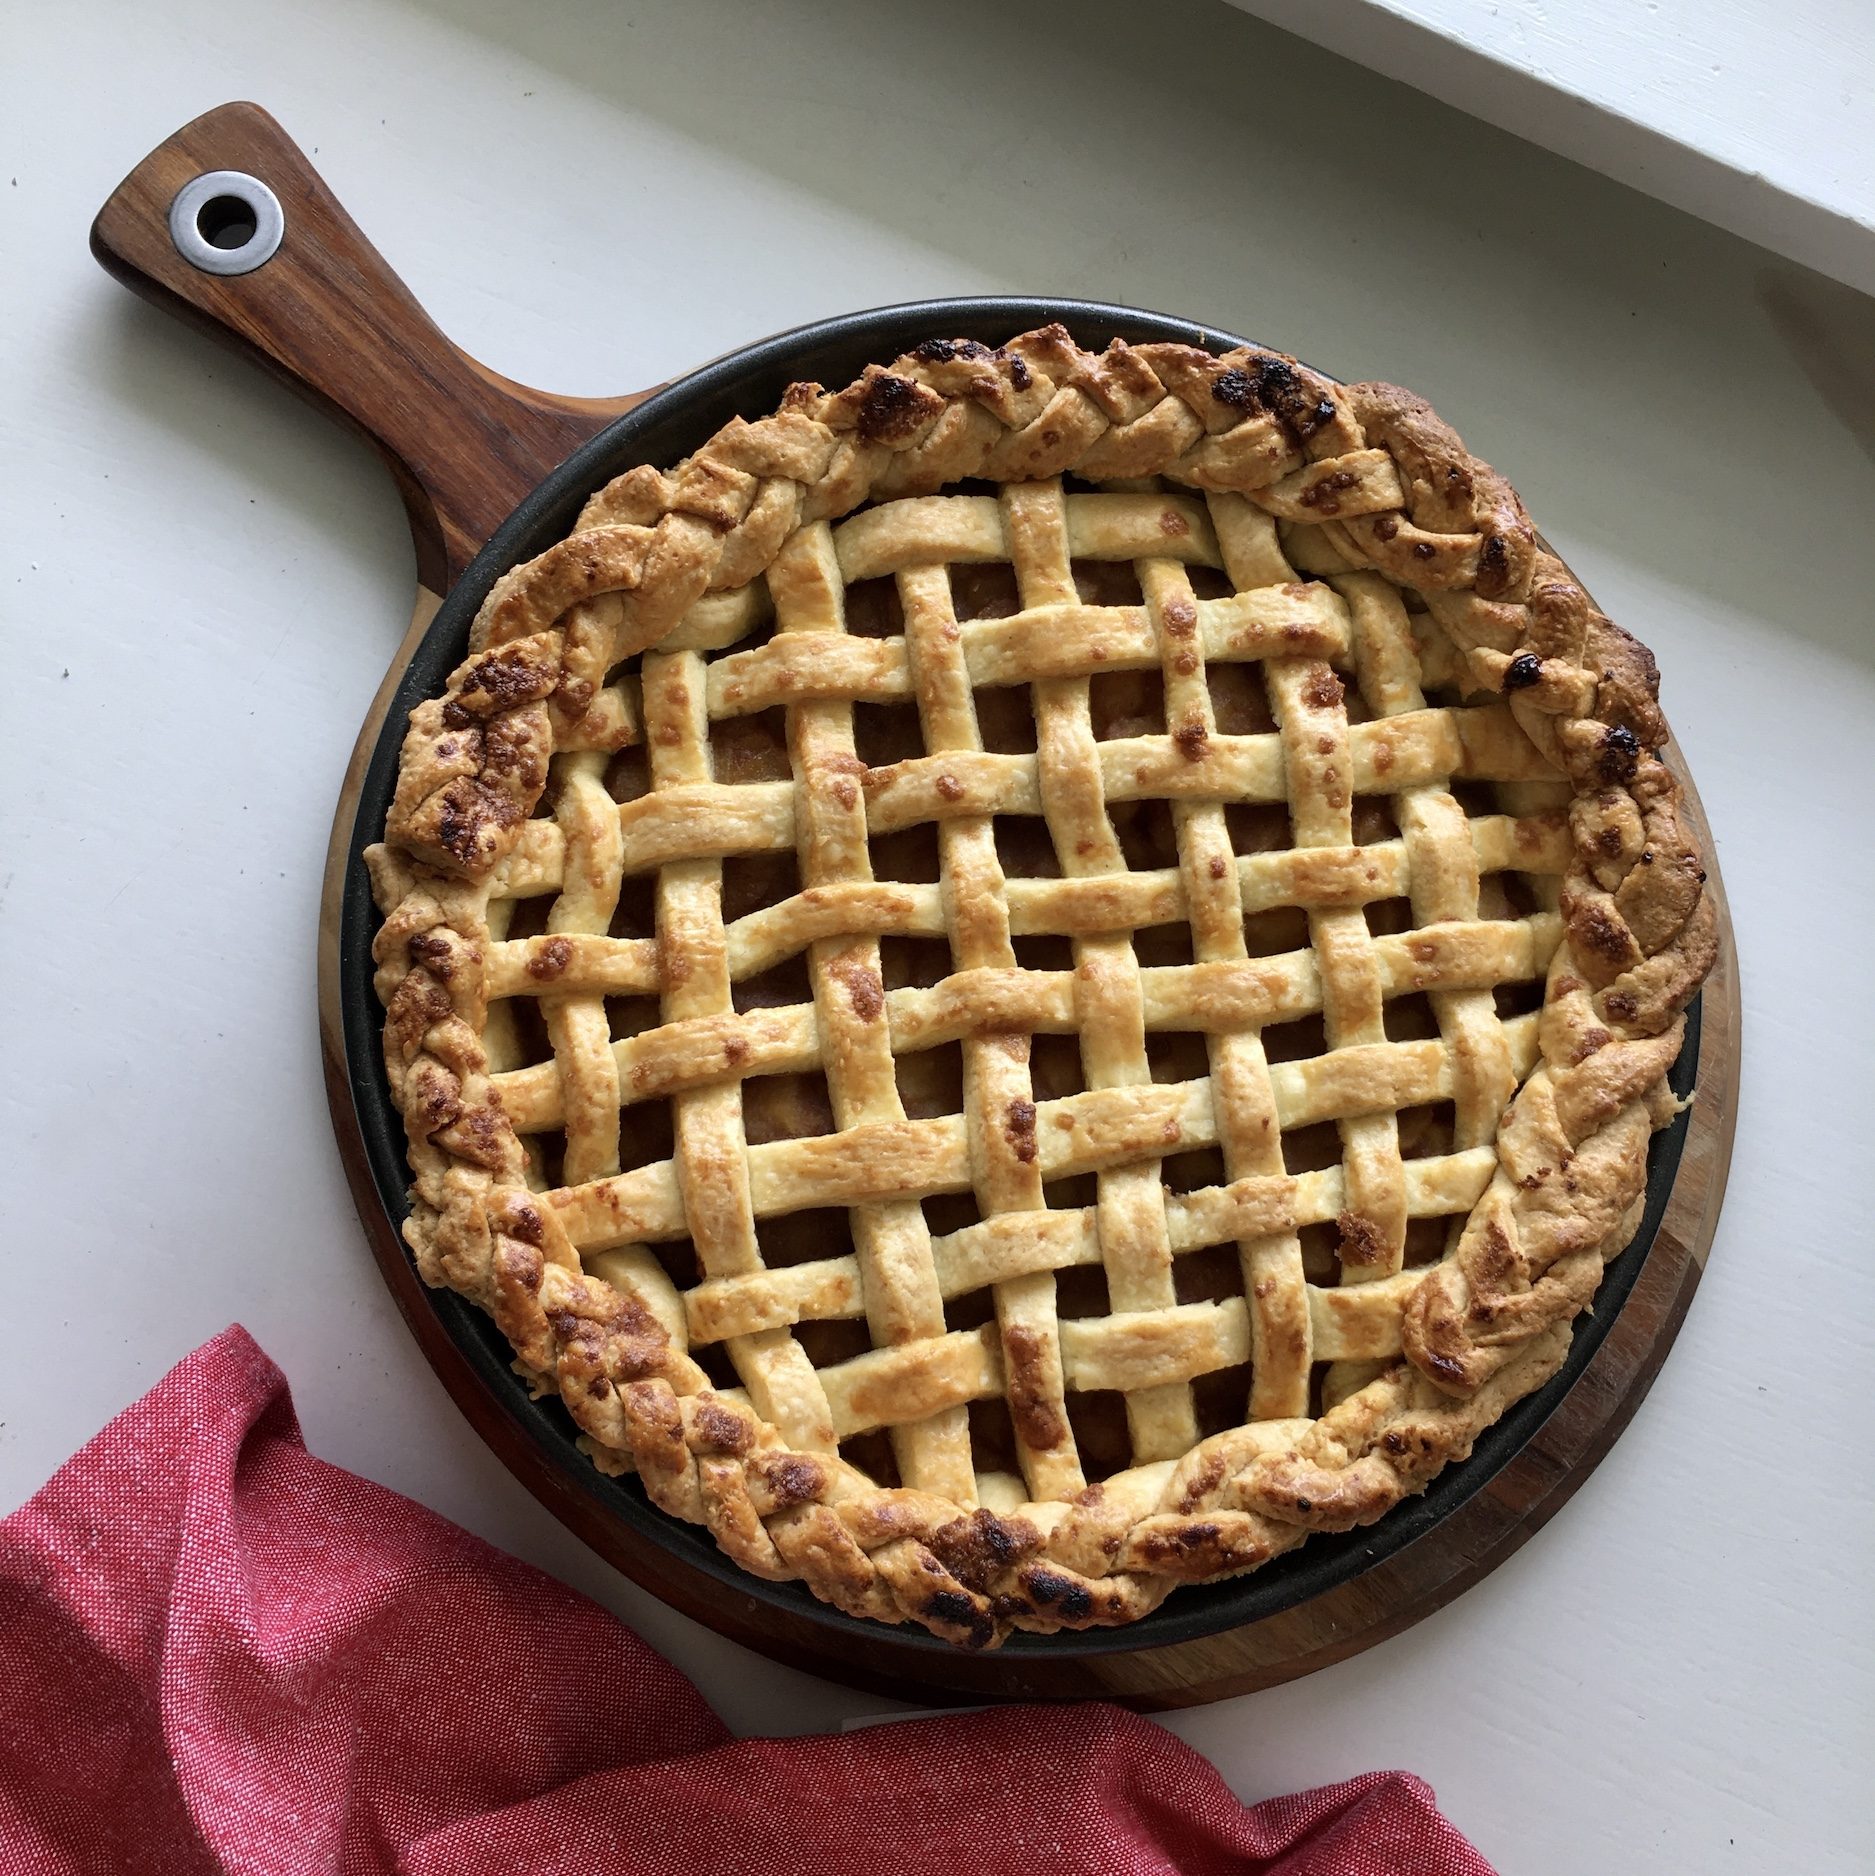 thanksgiving in new zealand: apple pie